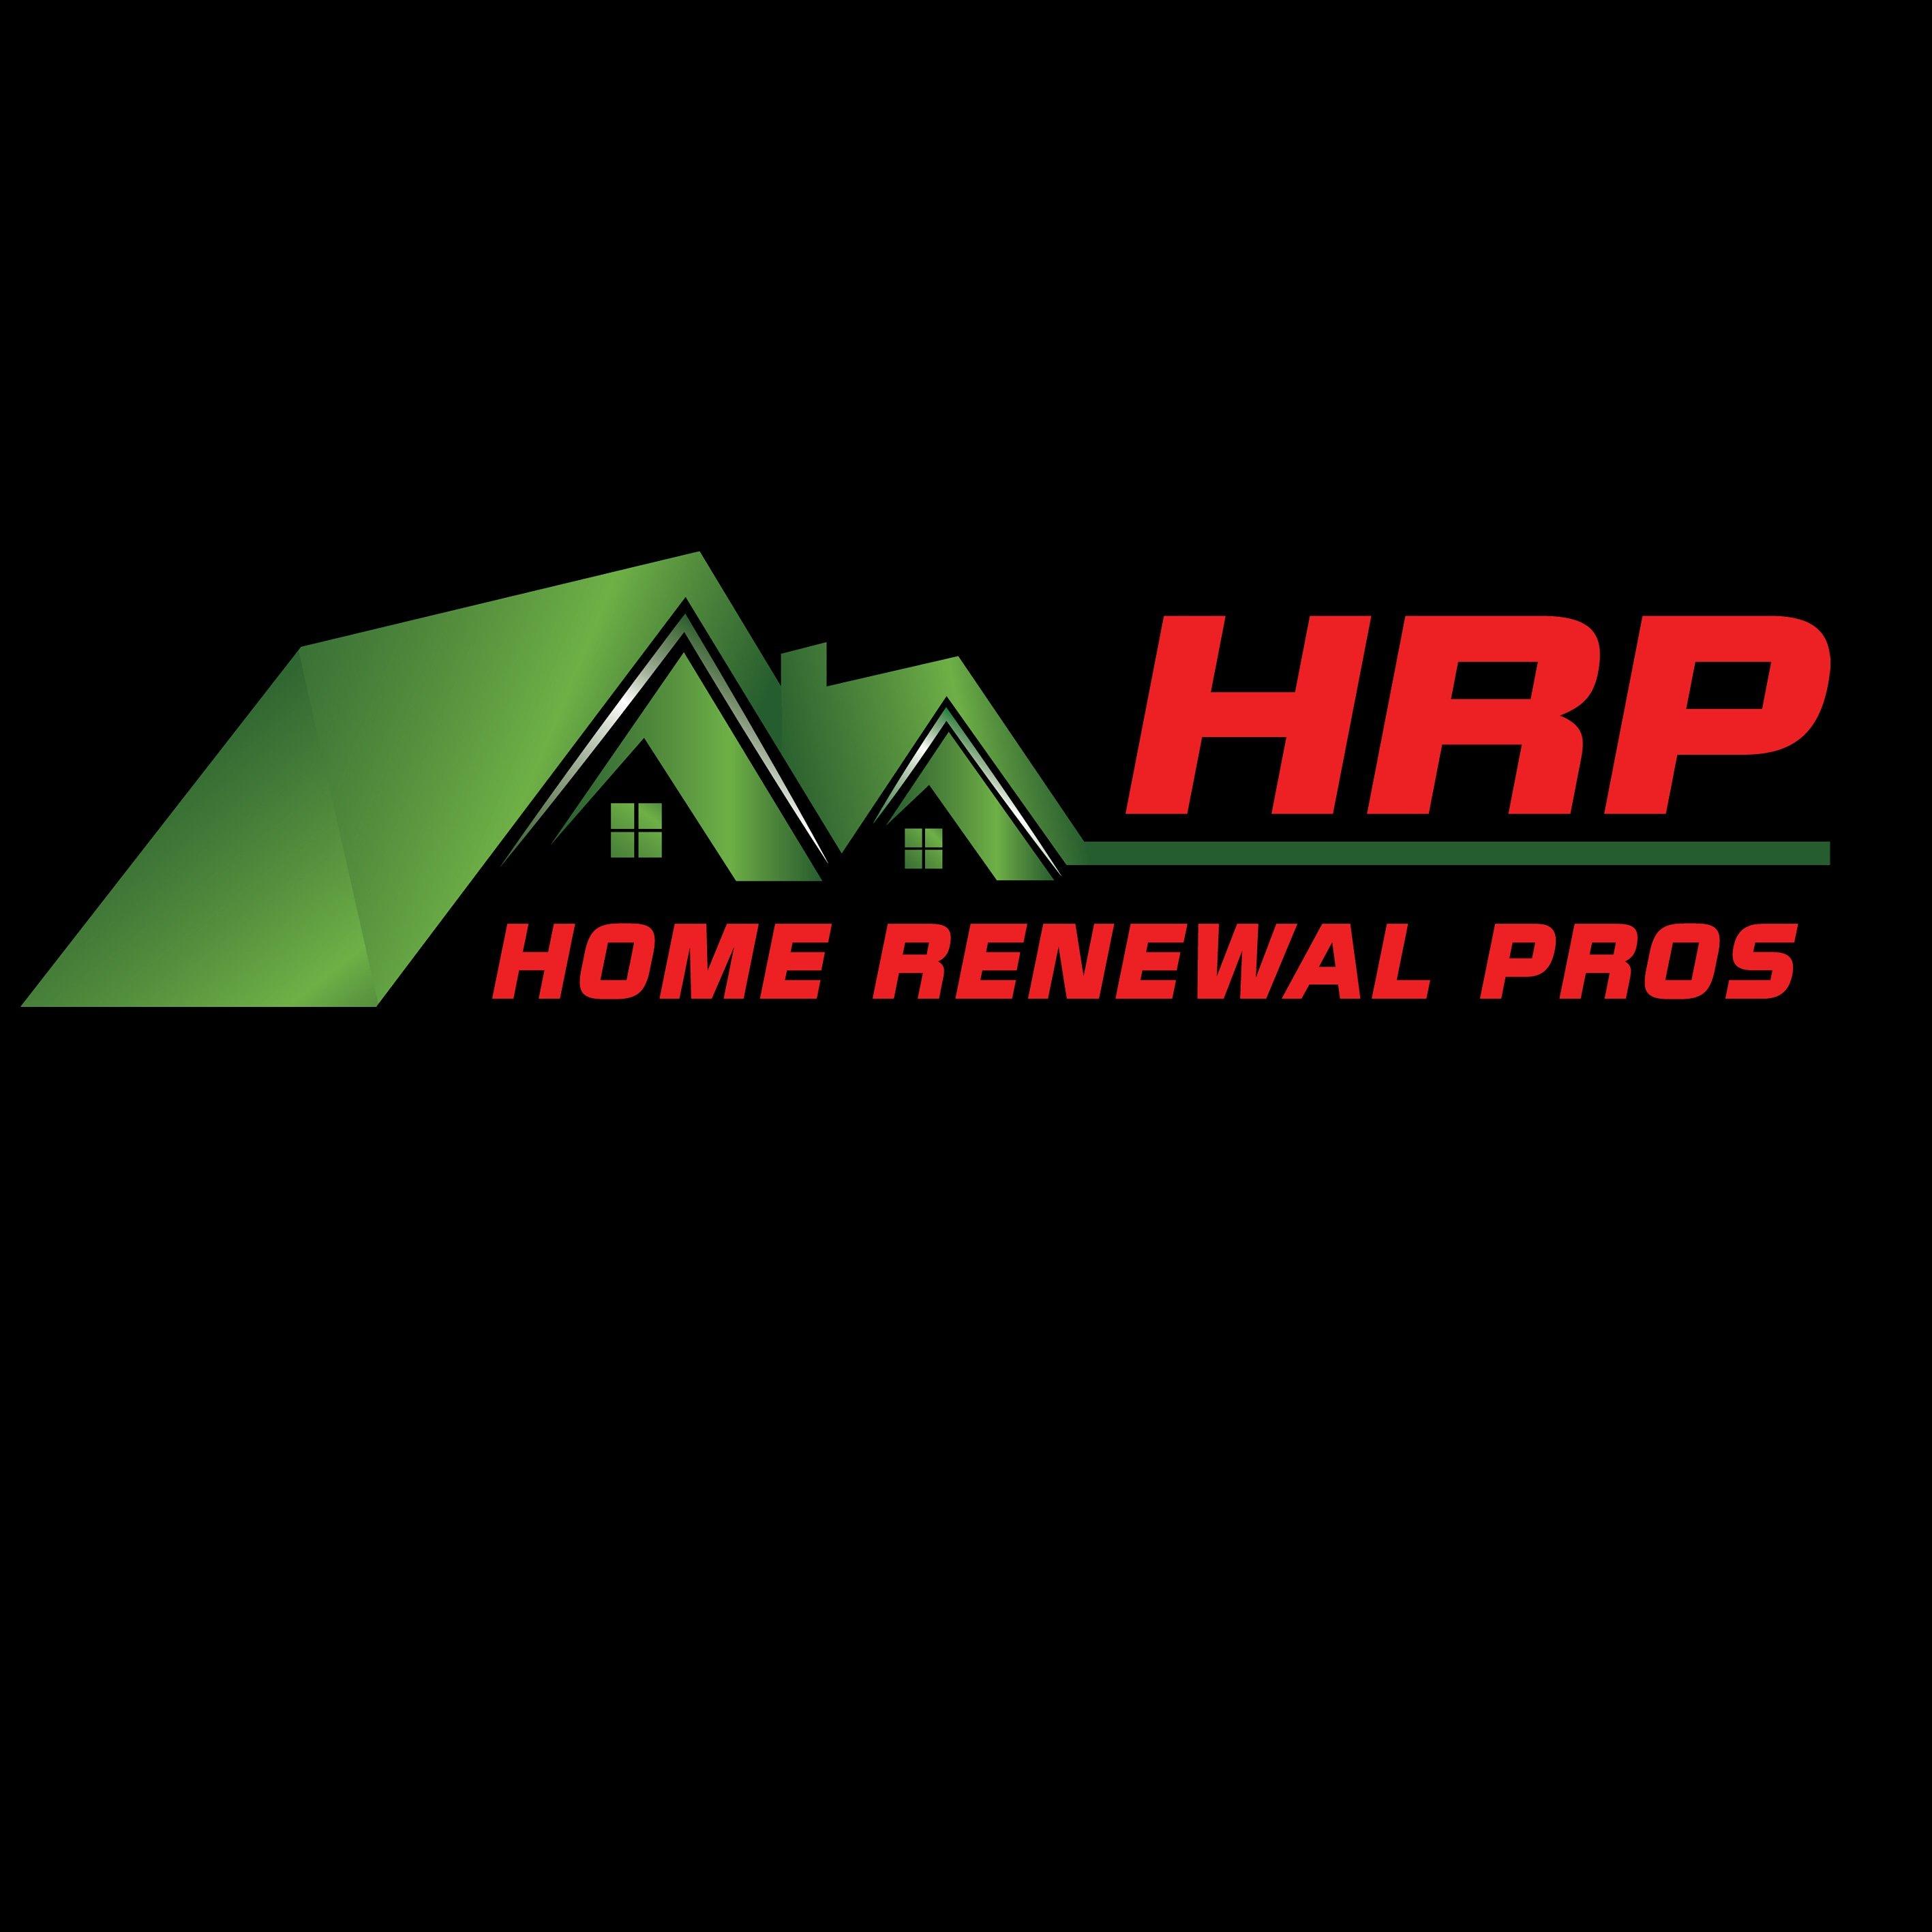 Home Renewal Pro, Inc Logo